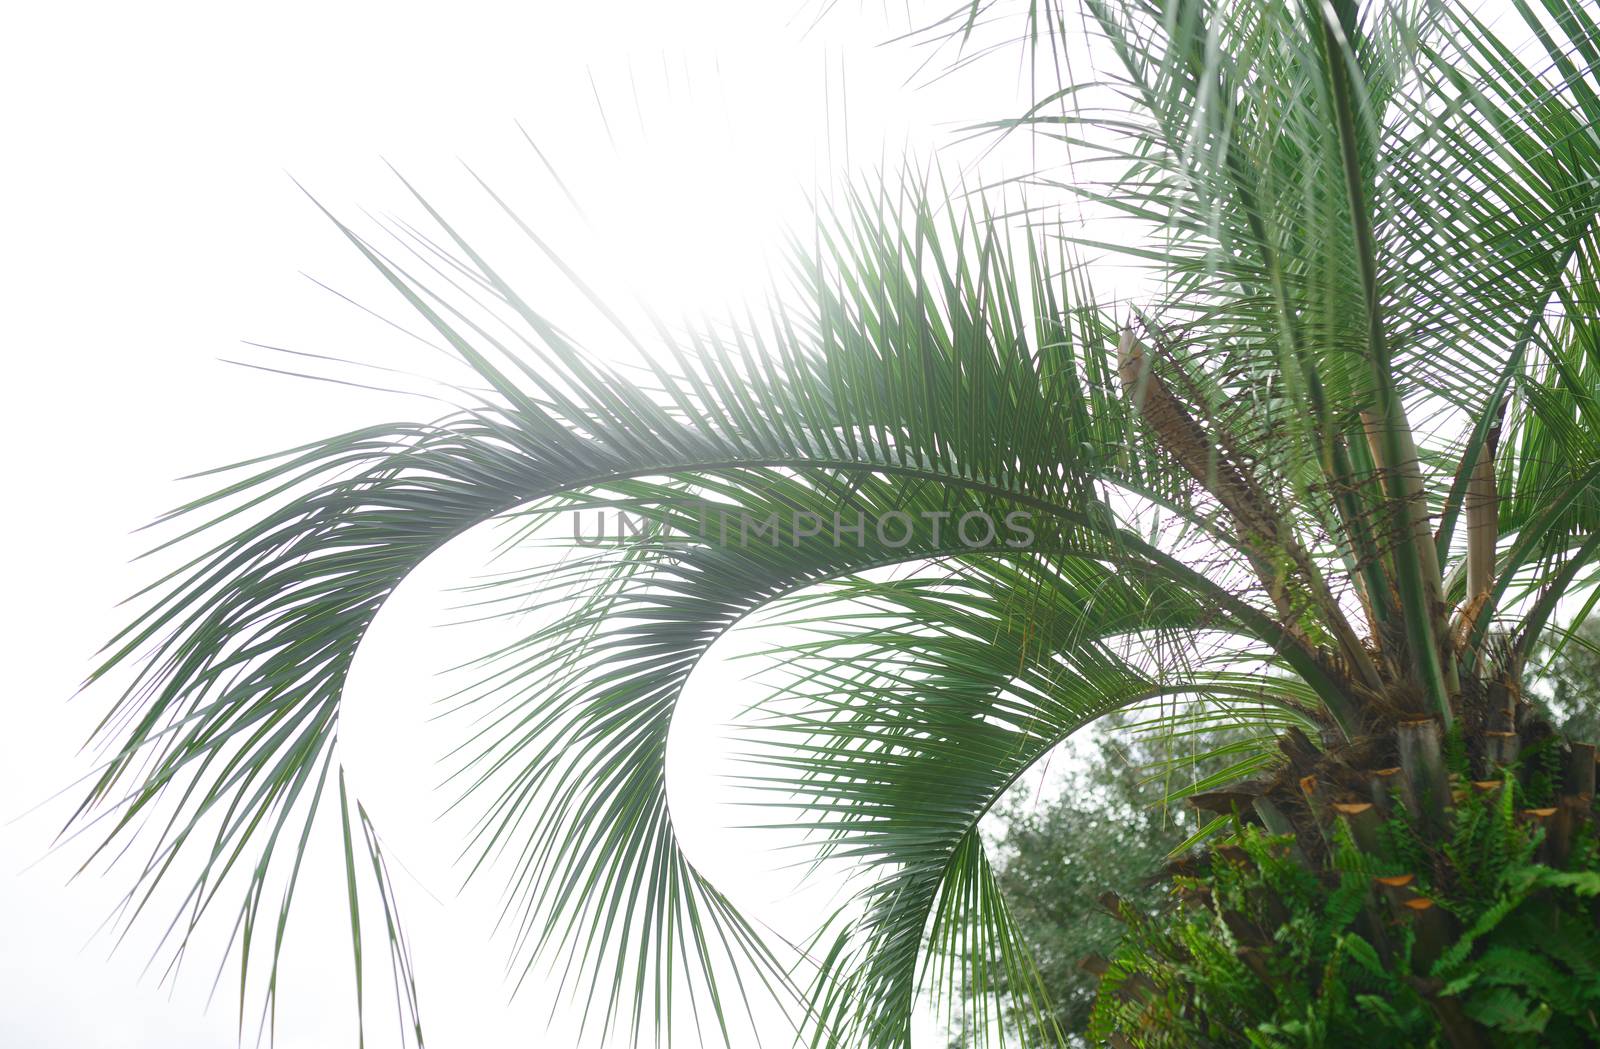 Palm trees against the sunny sky